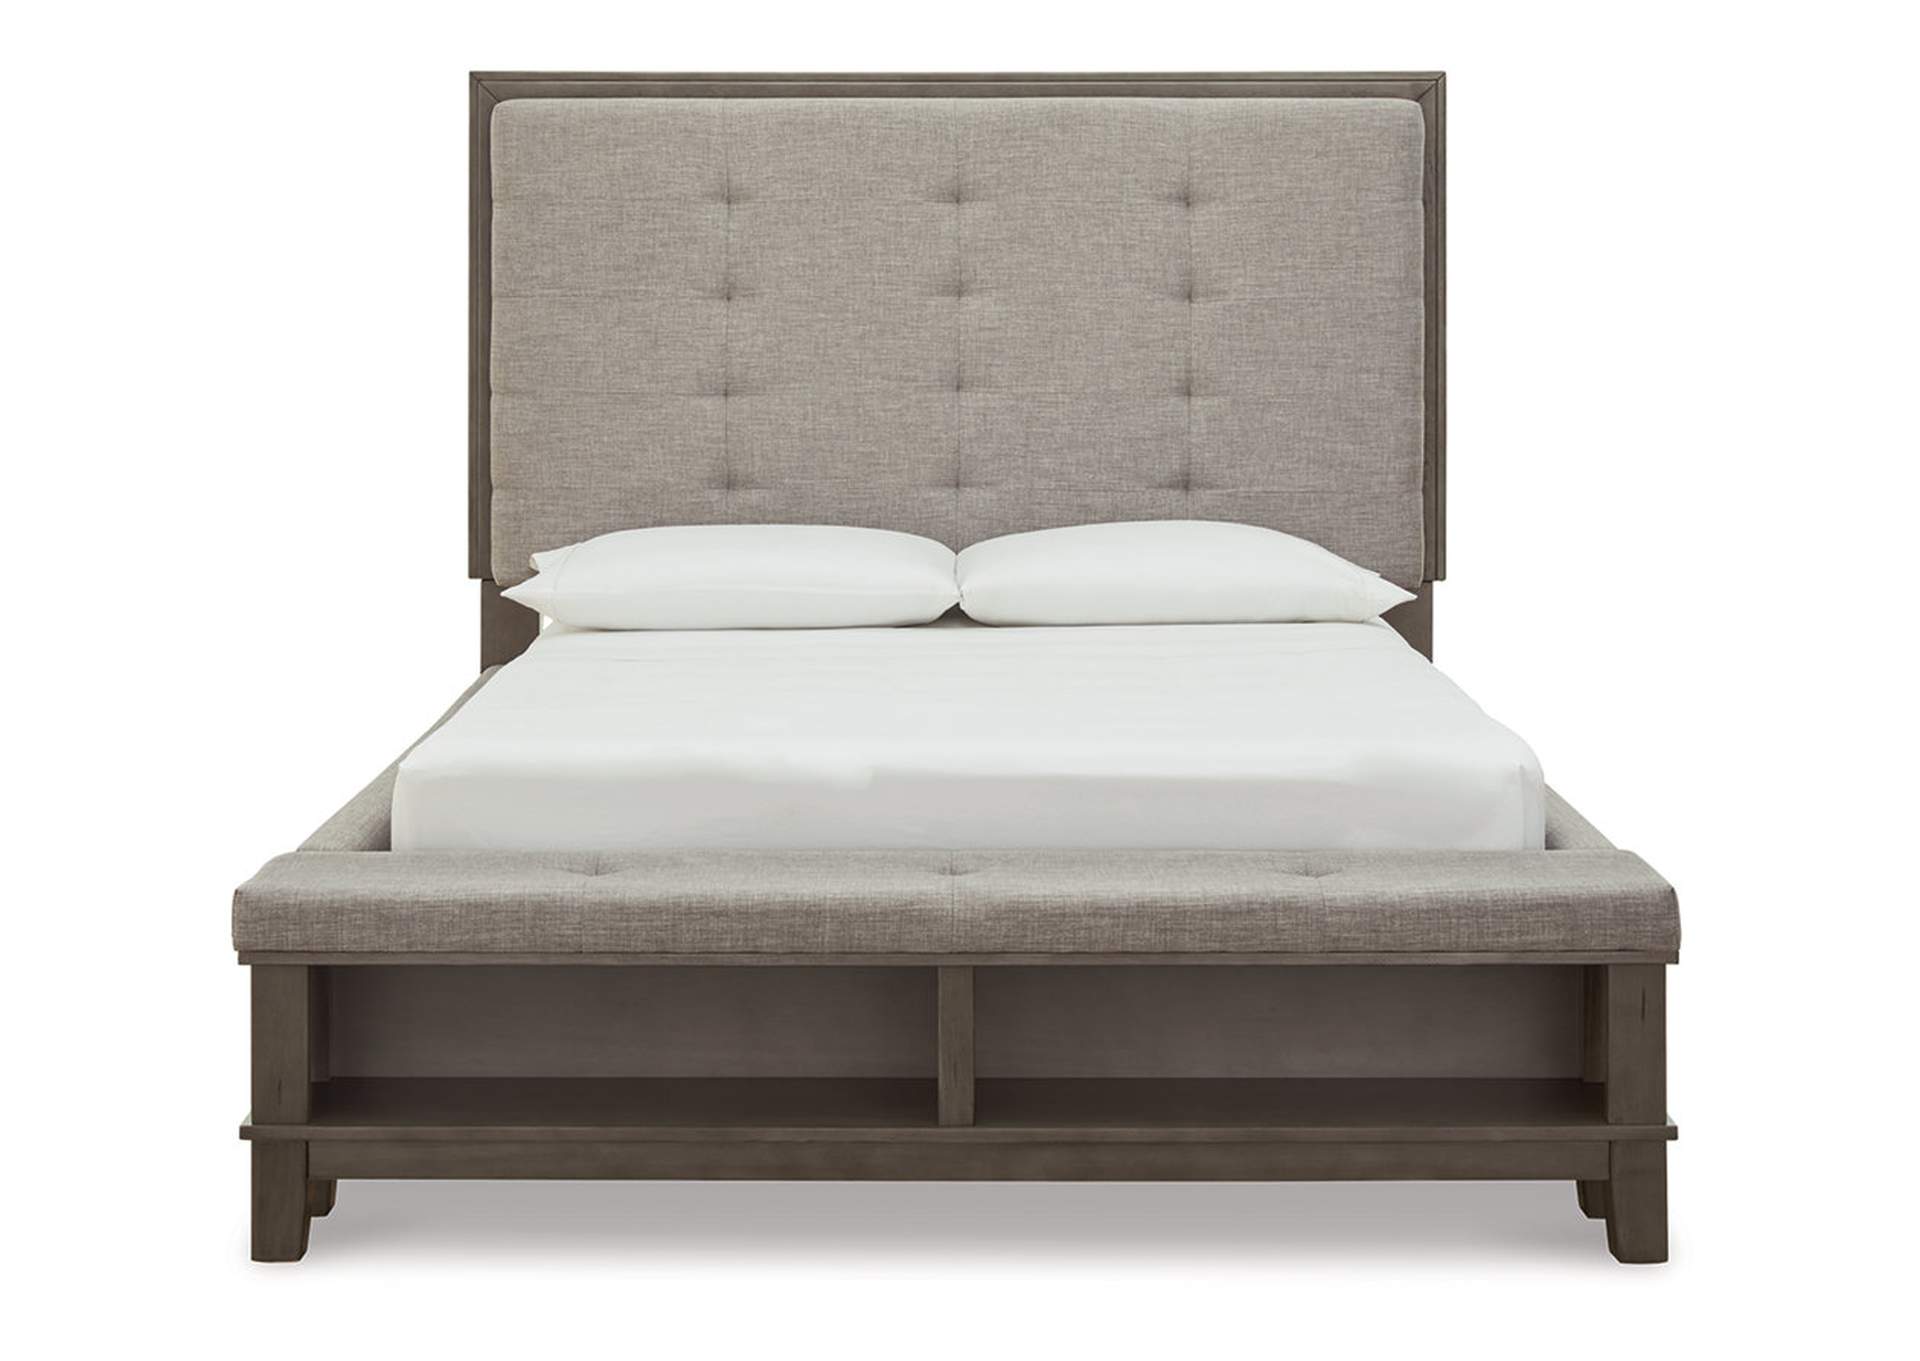 Hallanden Queen Panel Bed with Storage,Benchcraft